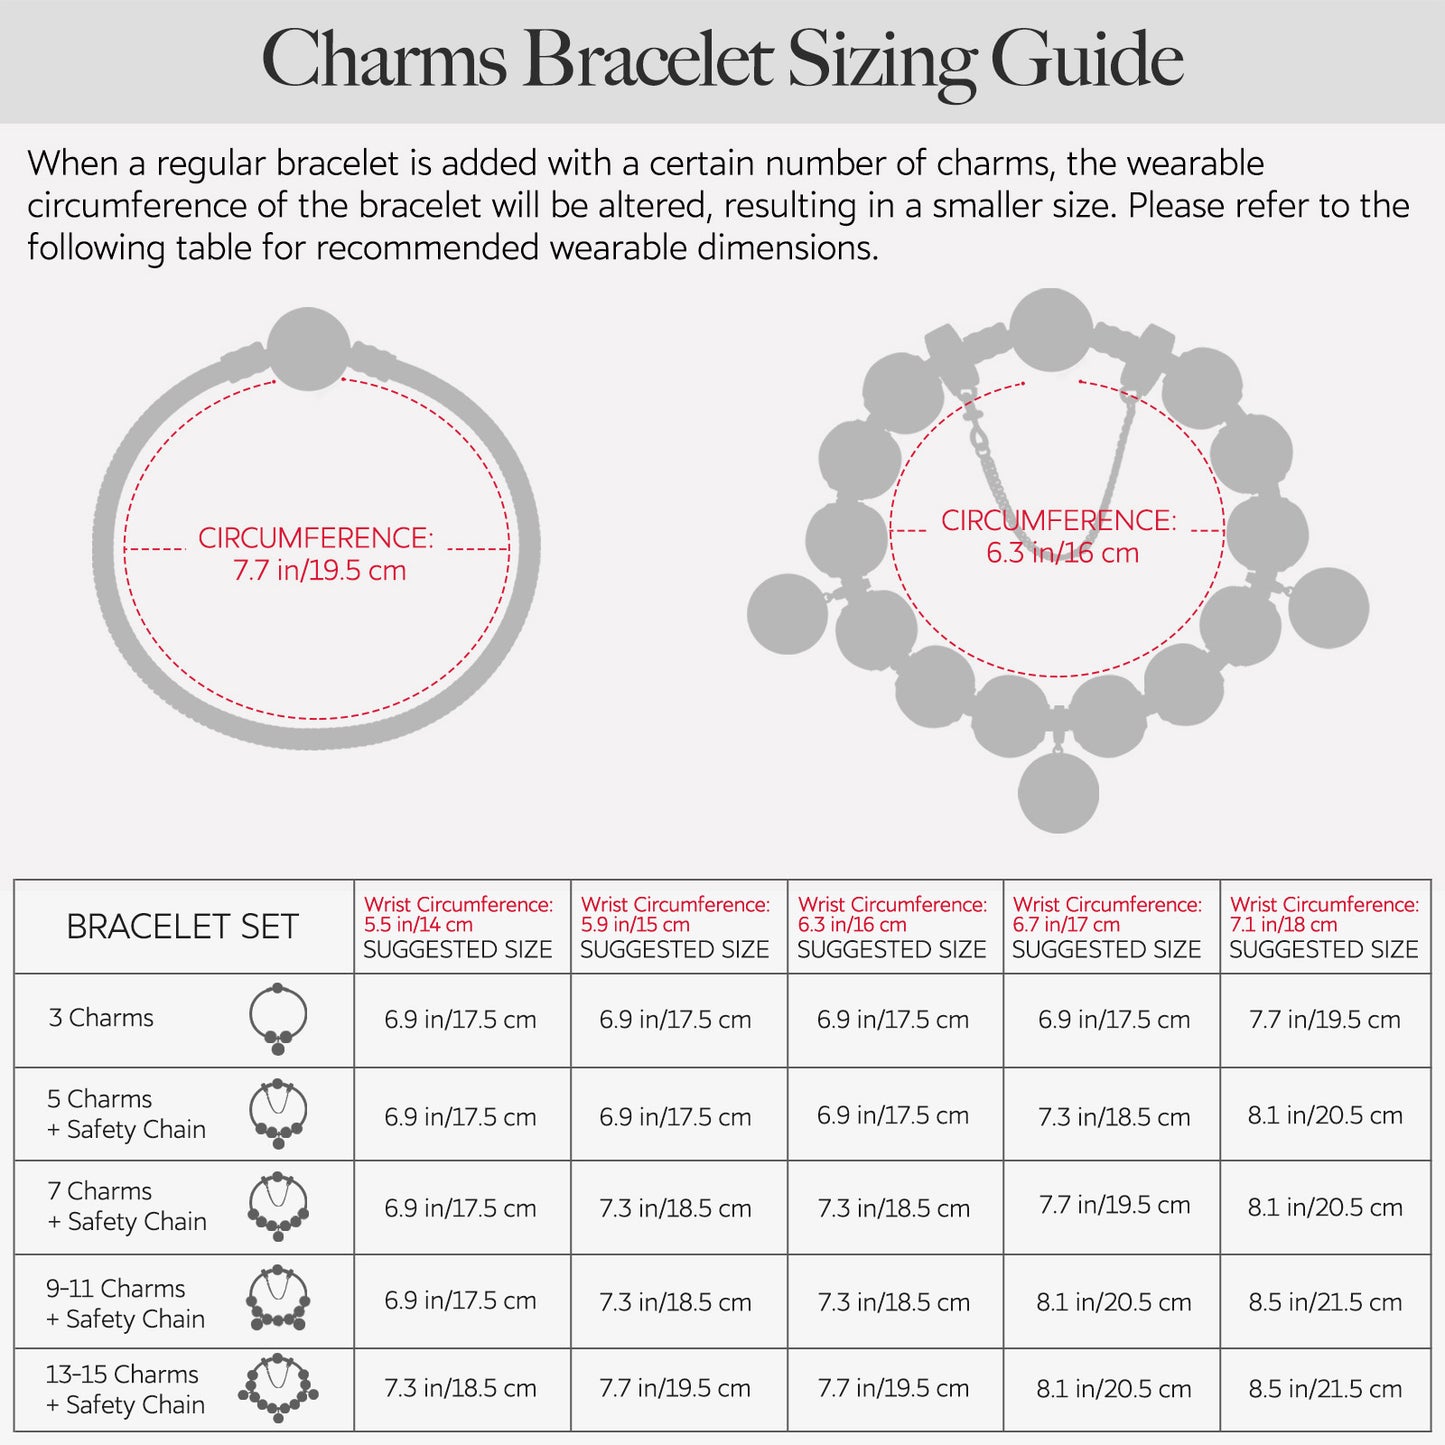 Sterling Silver Sunlit Clover Charms Bracelet Set With Enamel In 14K Gold Plated